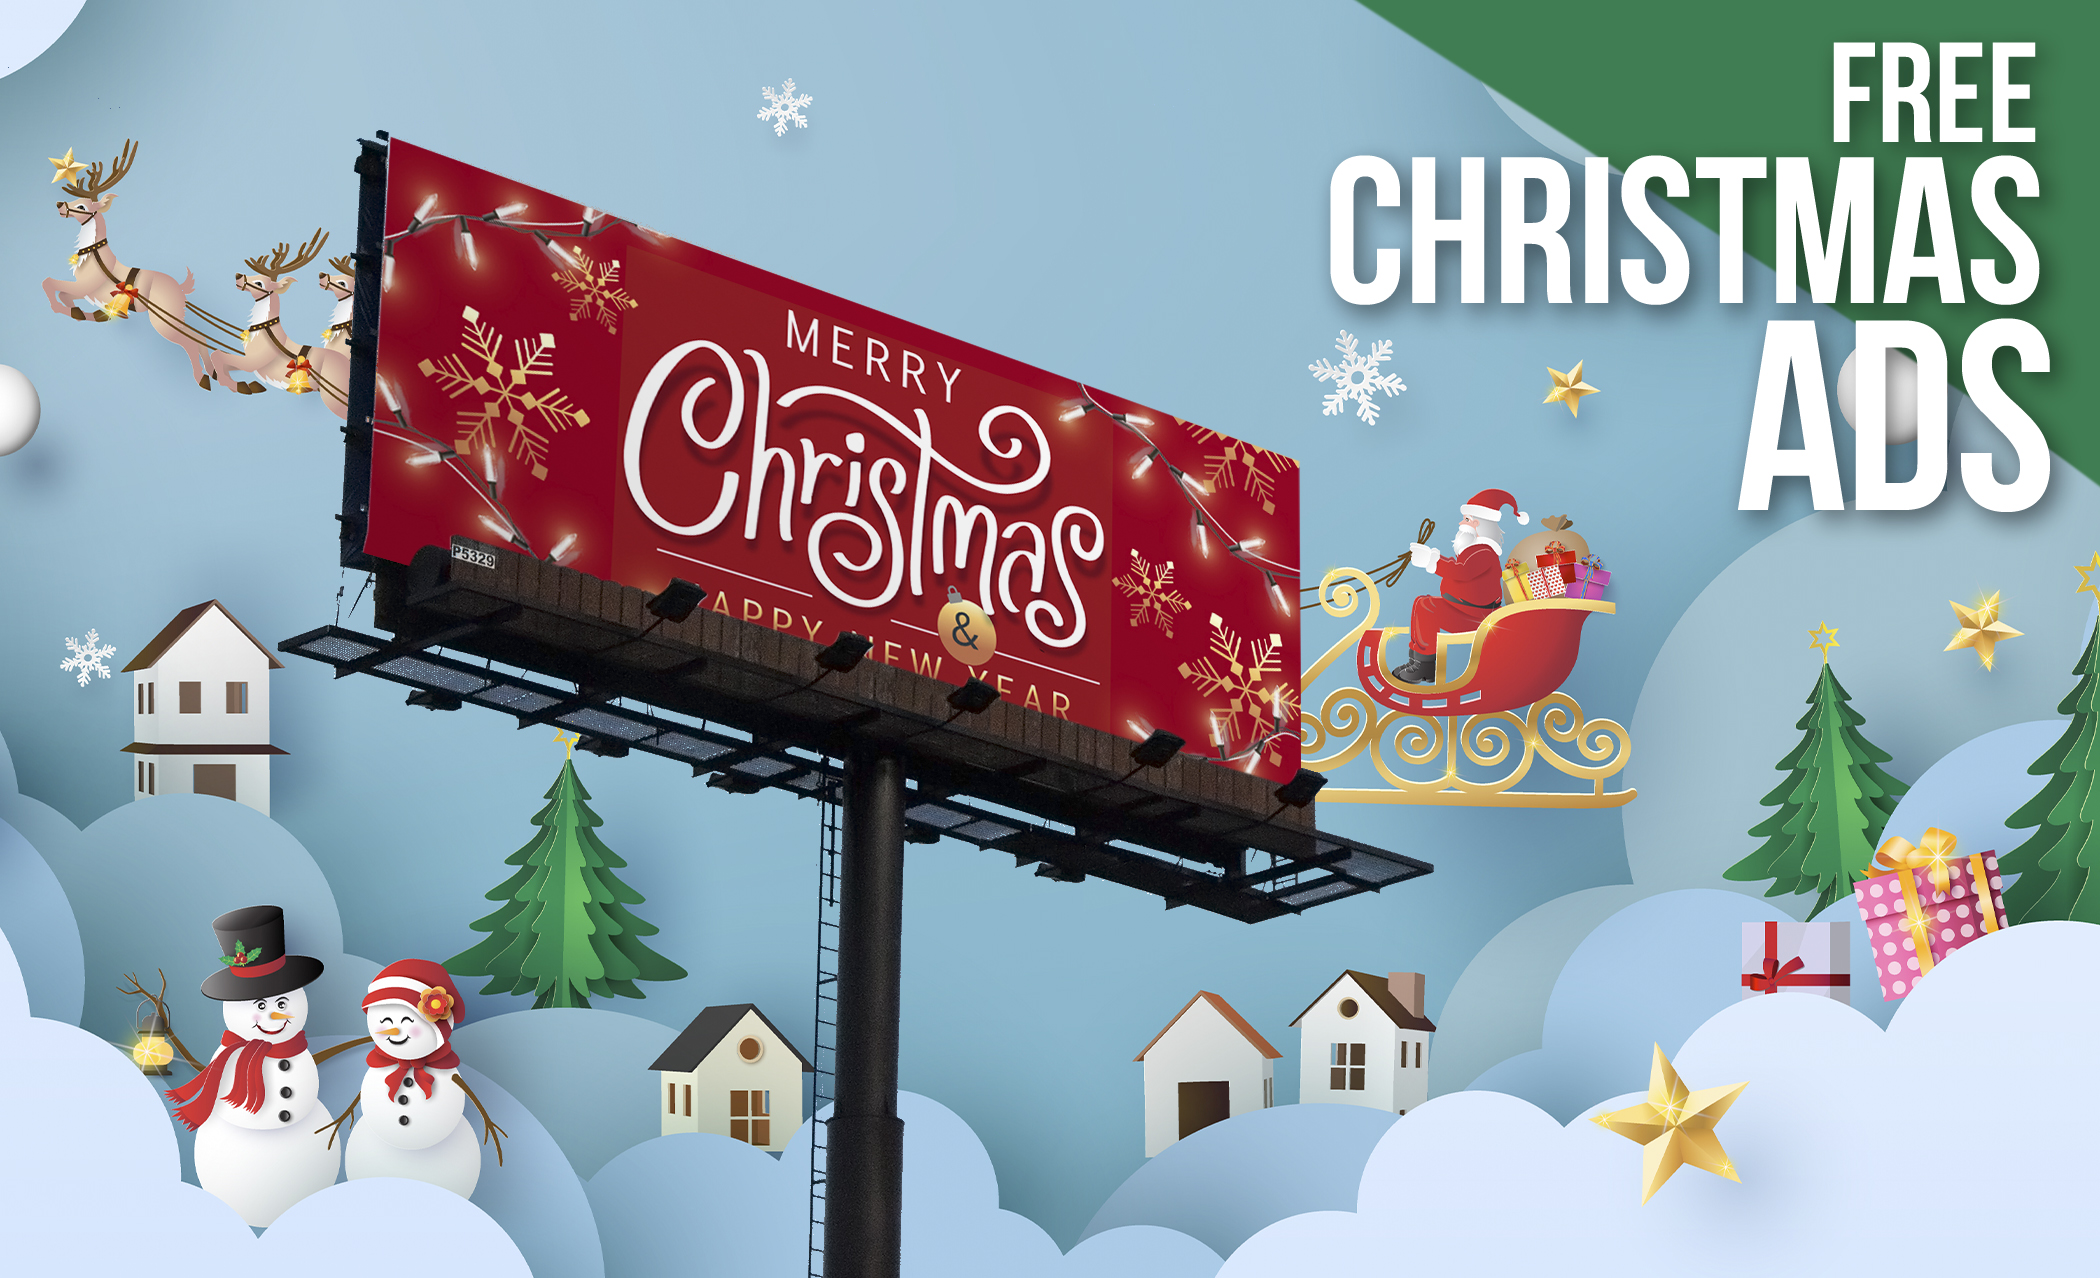 FREE Merry Christmas Billboard Ads